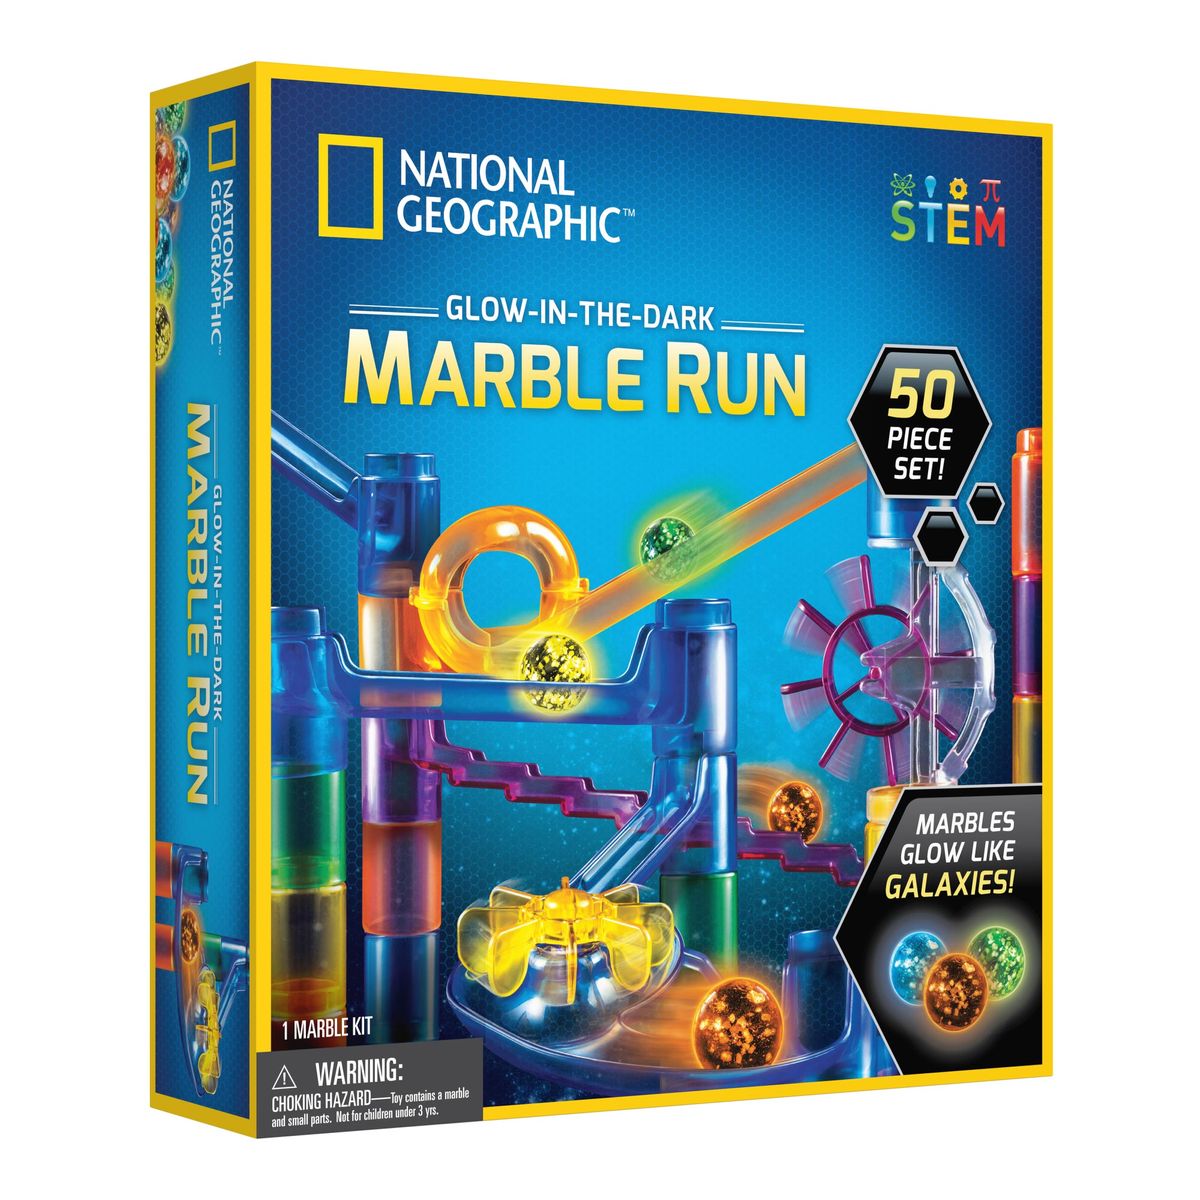 [RDY] [送料無料] ビー玉転がし マーブルラン Marble Run National Geographic Kids STEM Series Glowing Marble Run, 50ピースセット [楽天海外通販]